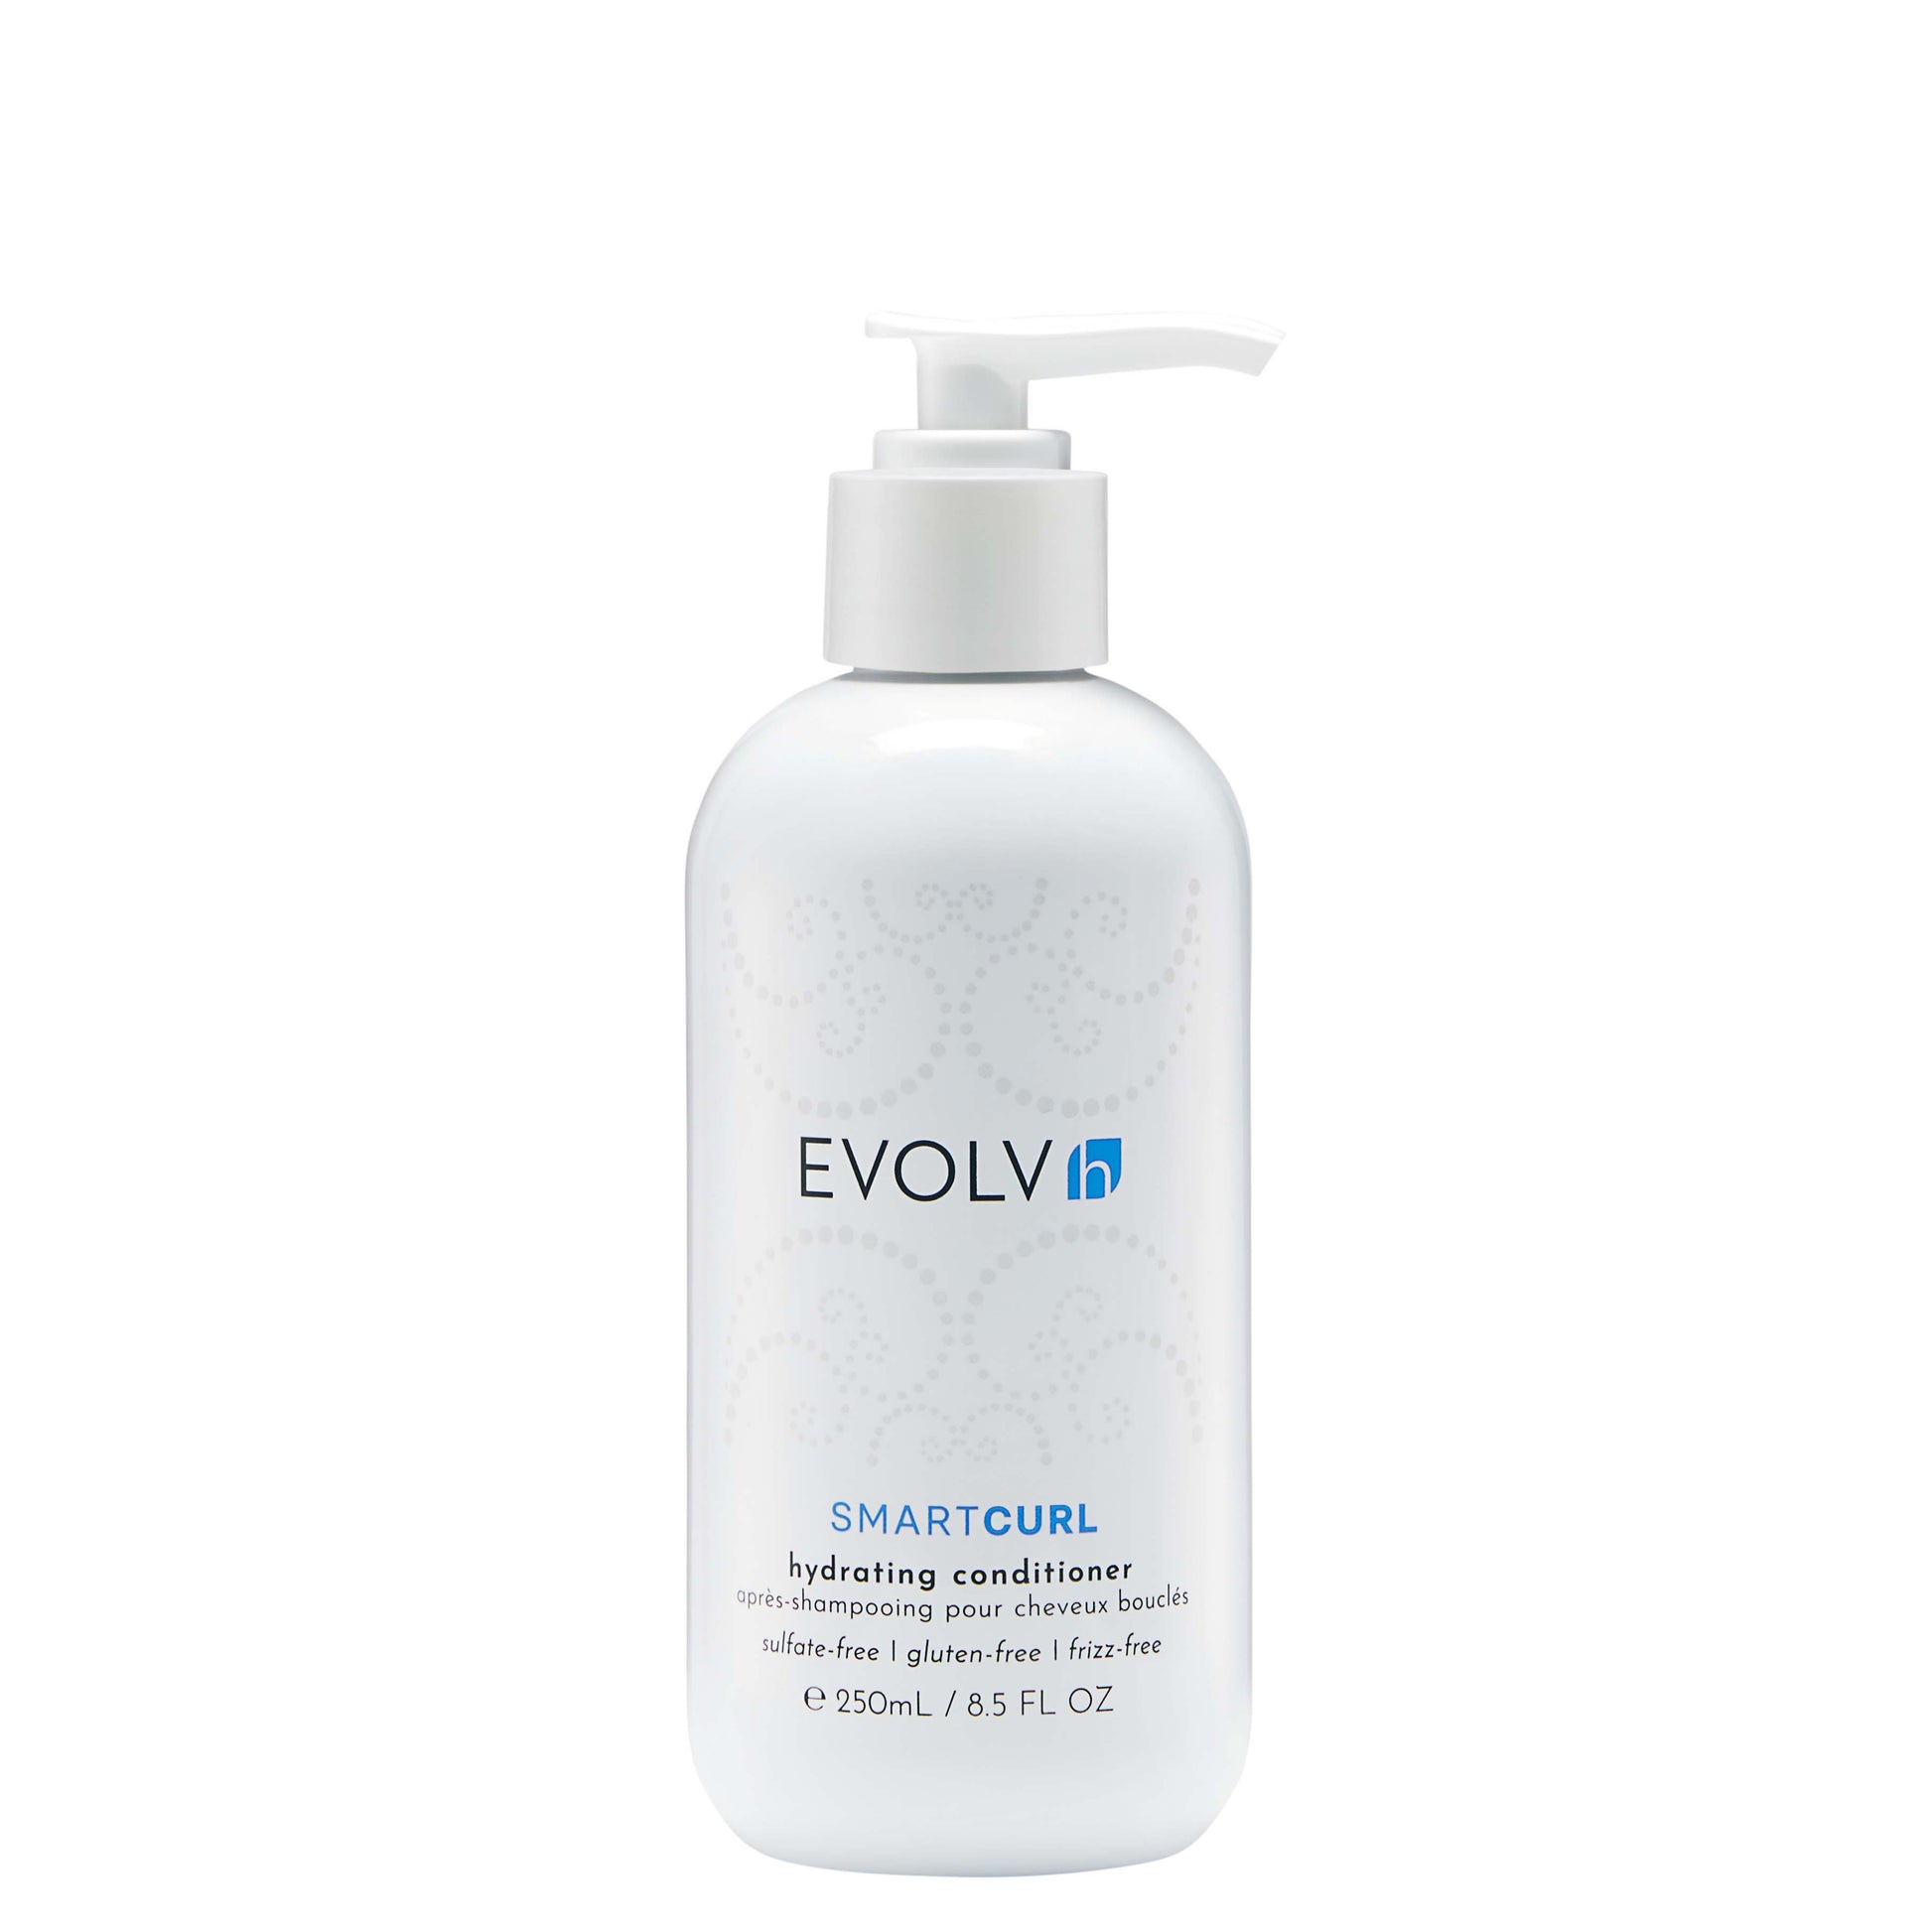 EVOLVH SmartCurl Hydrating Conditioner full size